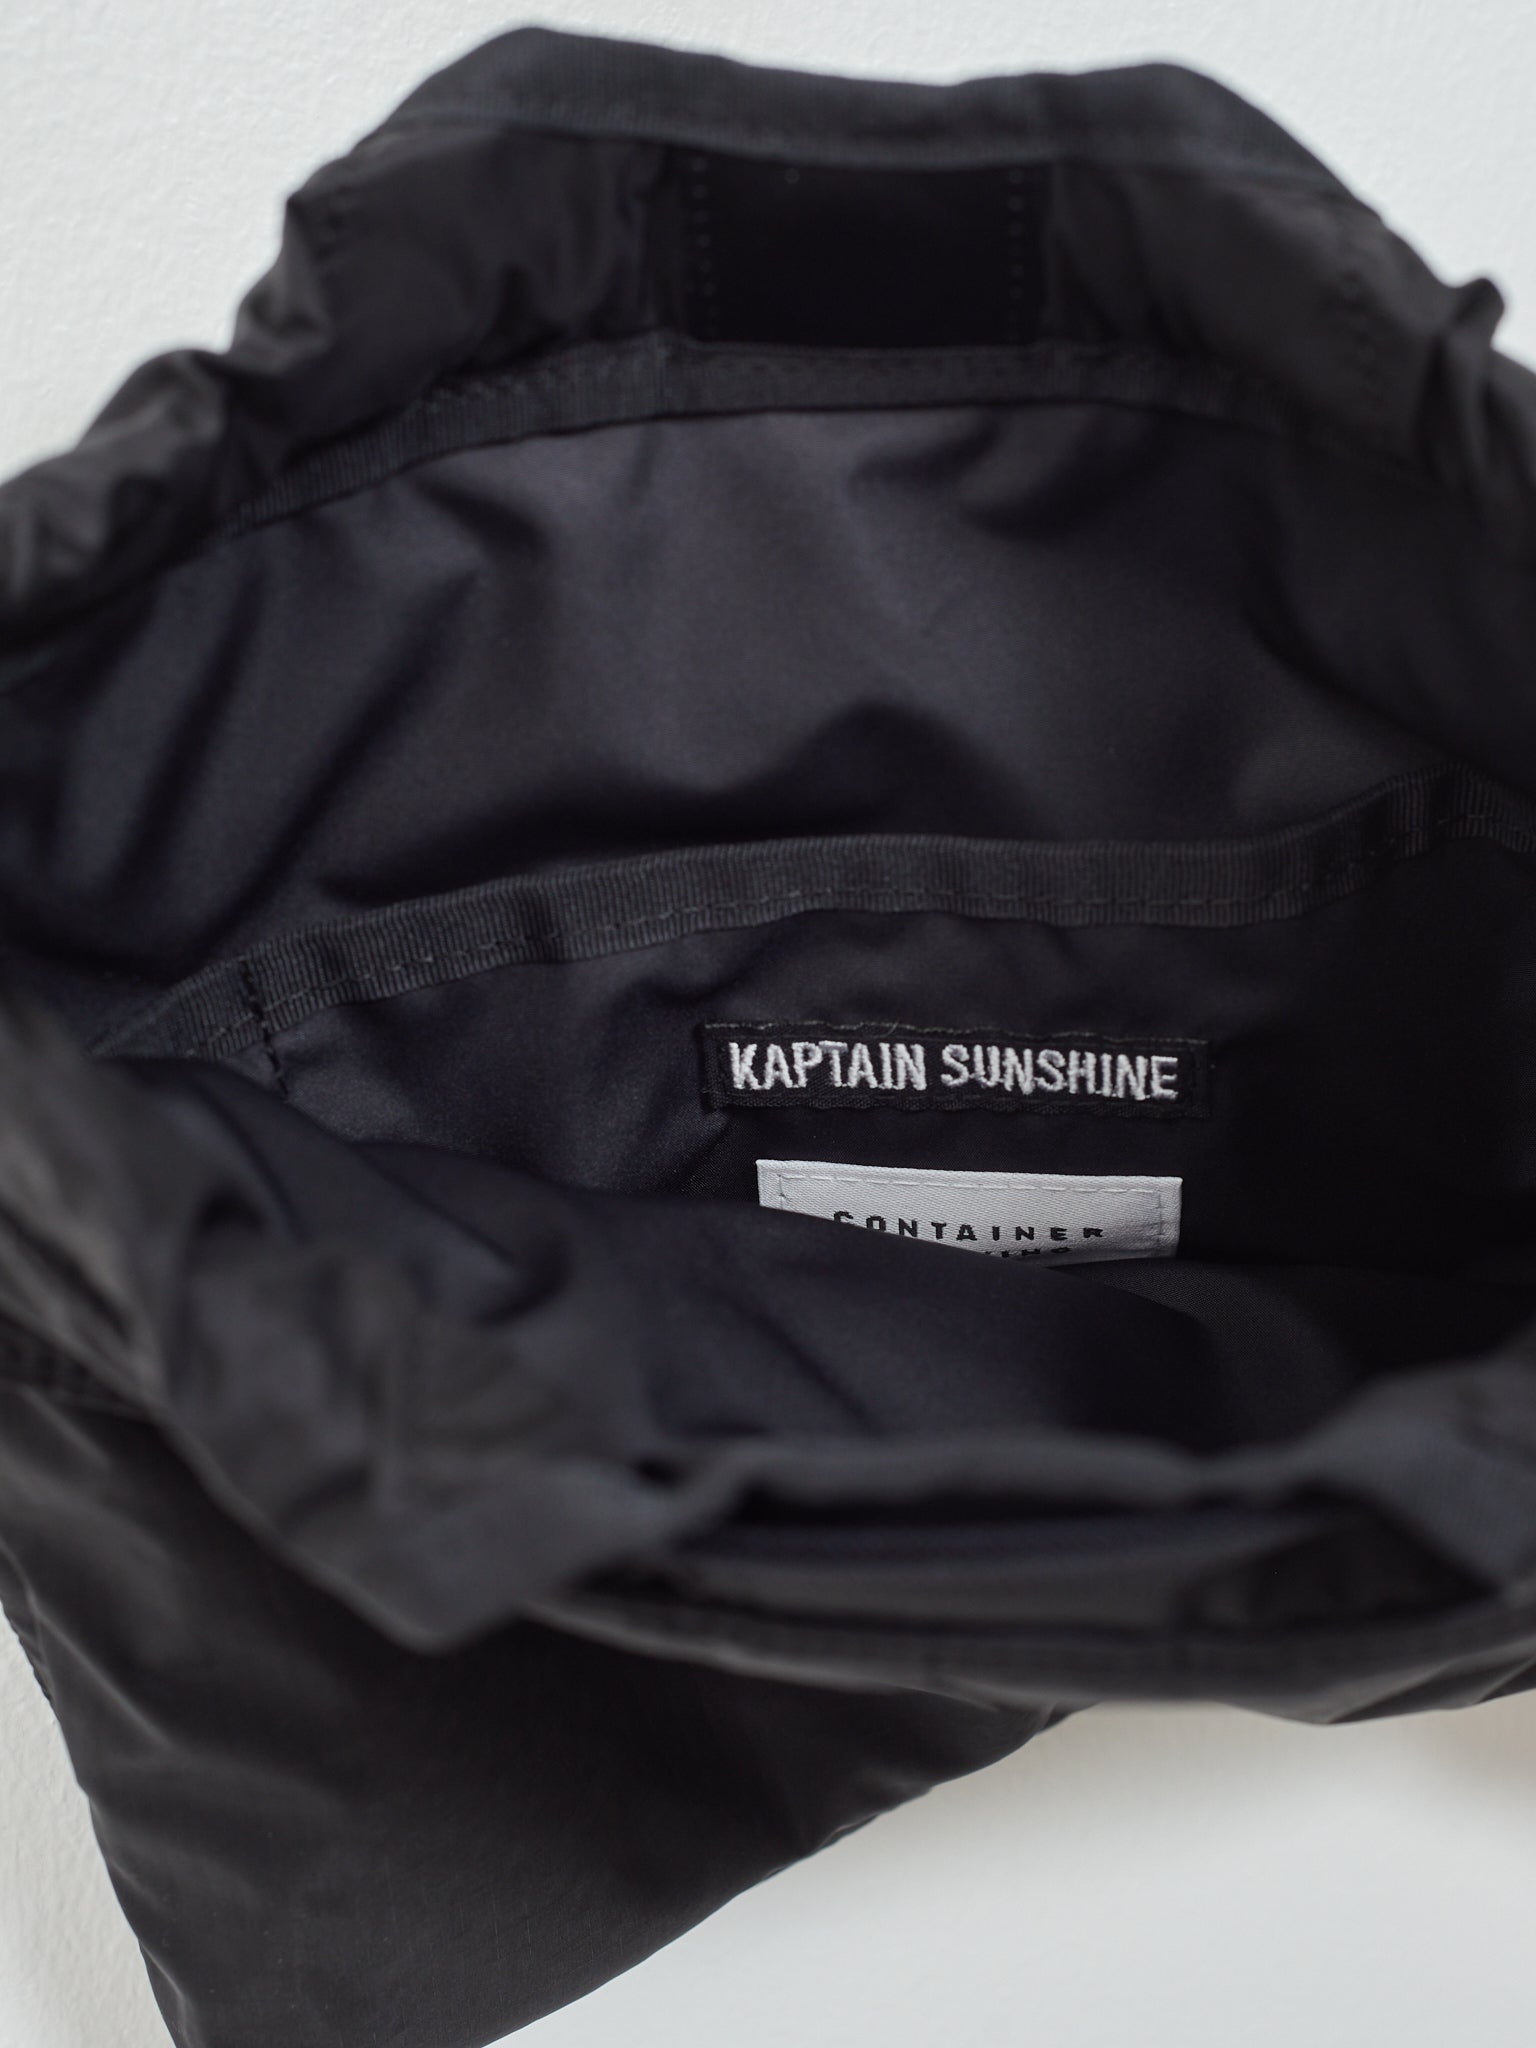 Namu Shop - Kaptain Sunshine Flight Bag S - Black